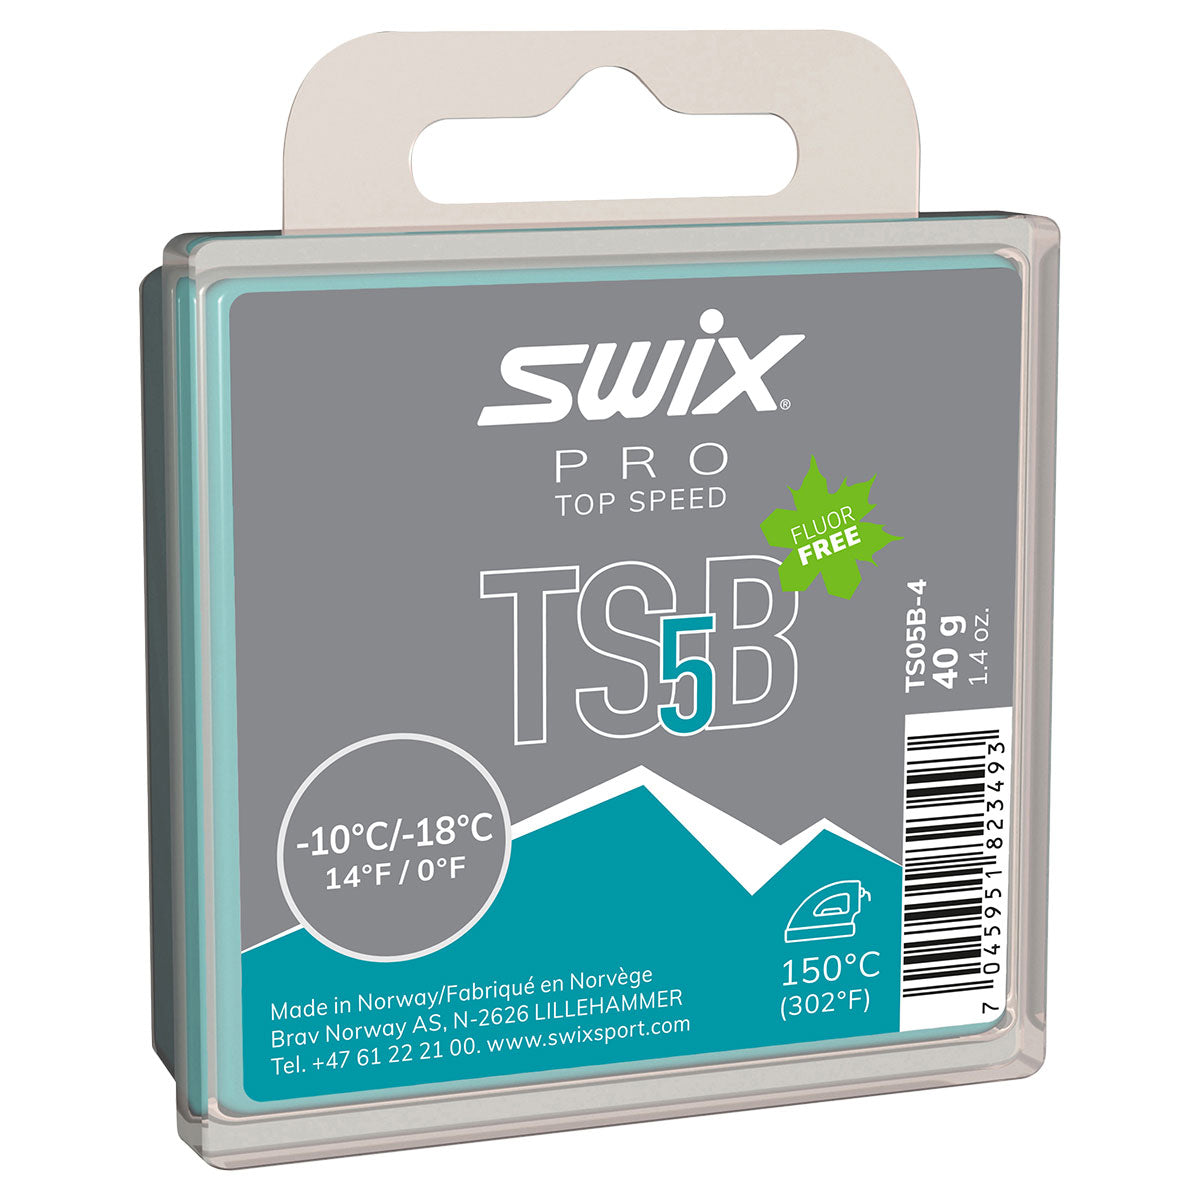 Swix Pro Top Speed Liquid Spray Ski Wax TS - Ship Ground Only - RaceWax